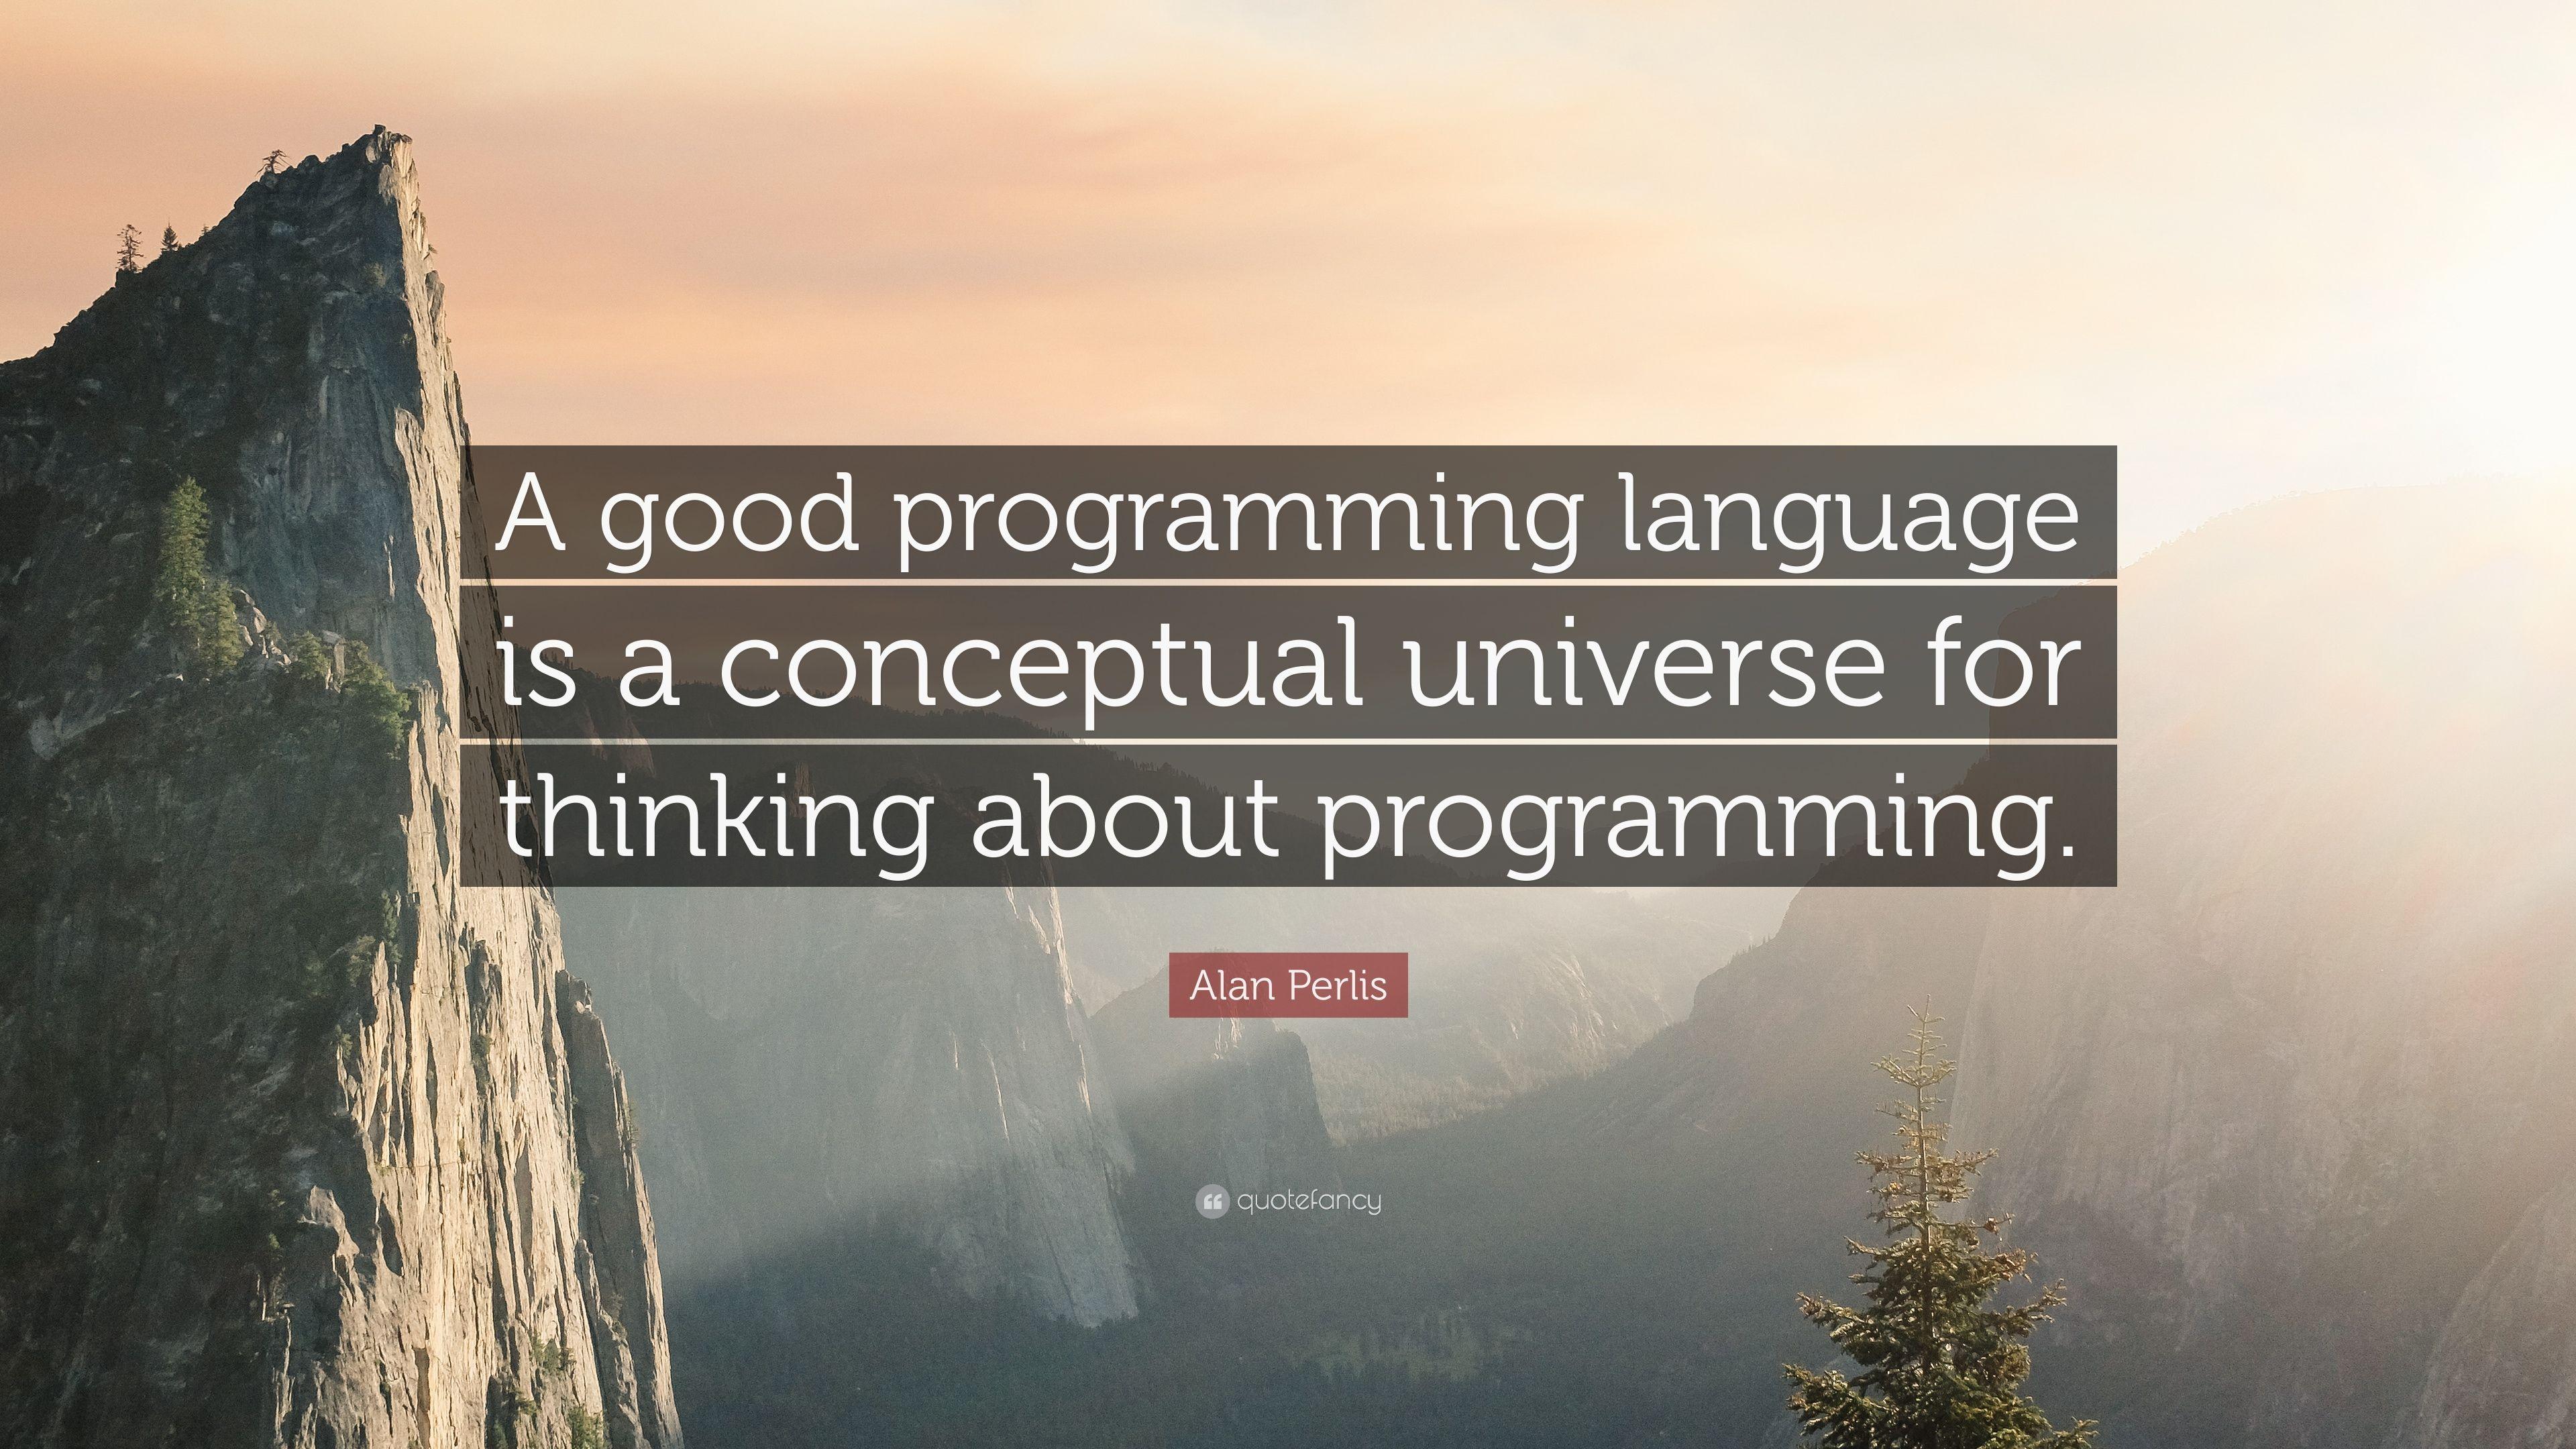 Alan Perlis Quote: “A good programming language is a conceptual